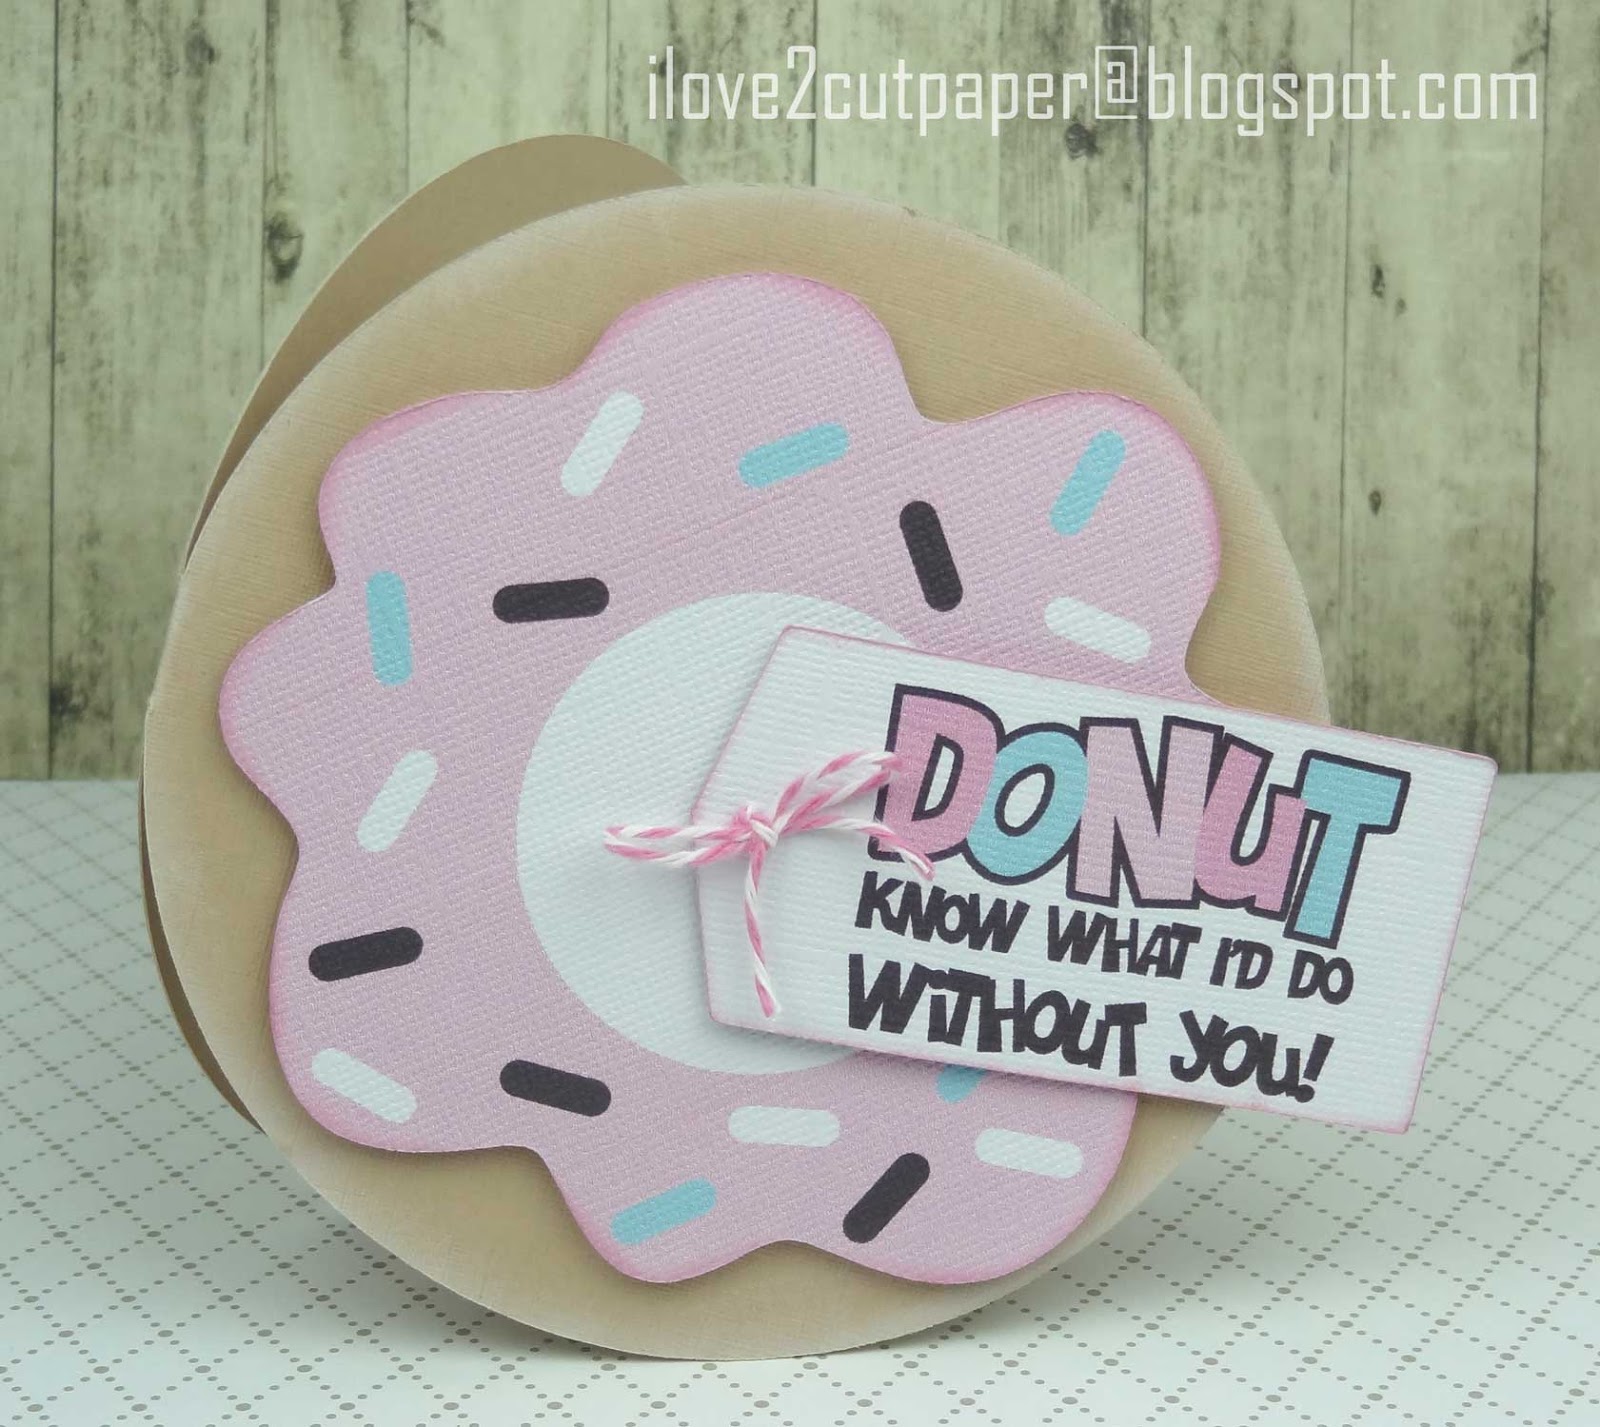 Download i love 2 cut paper: FREE File - Donut Gift Card Holder